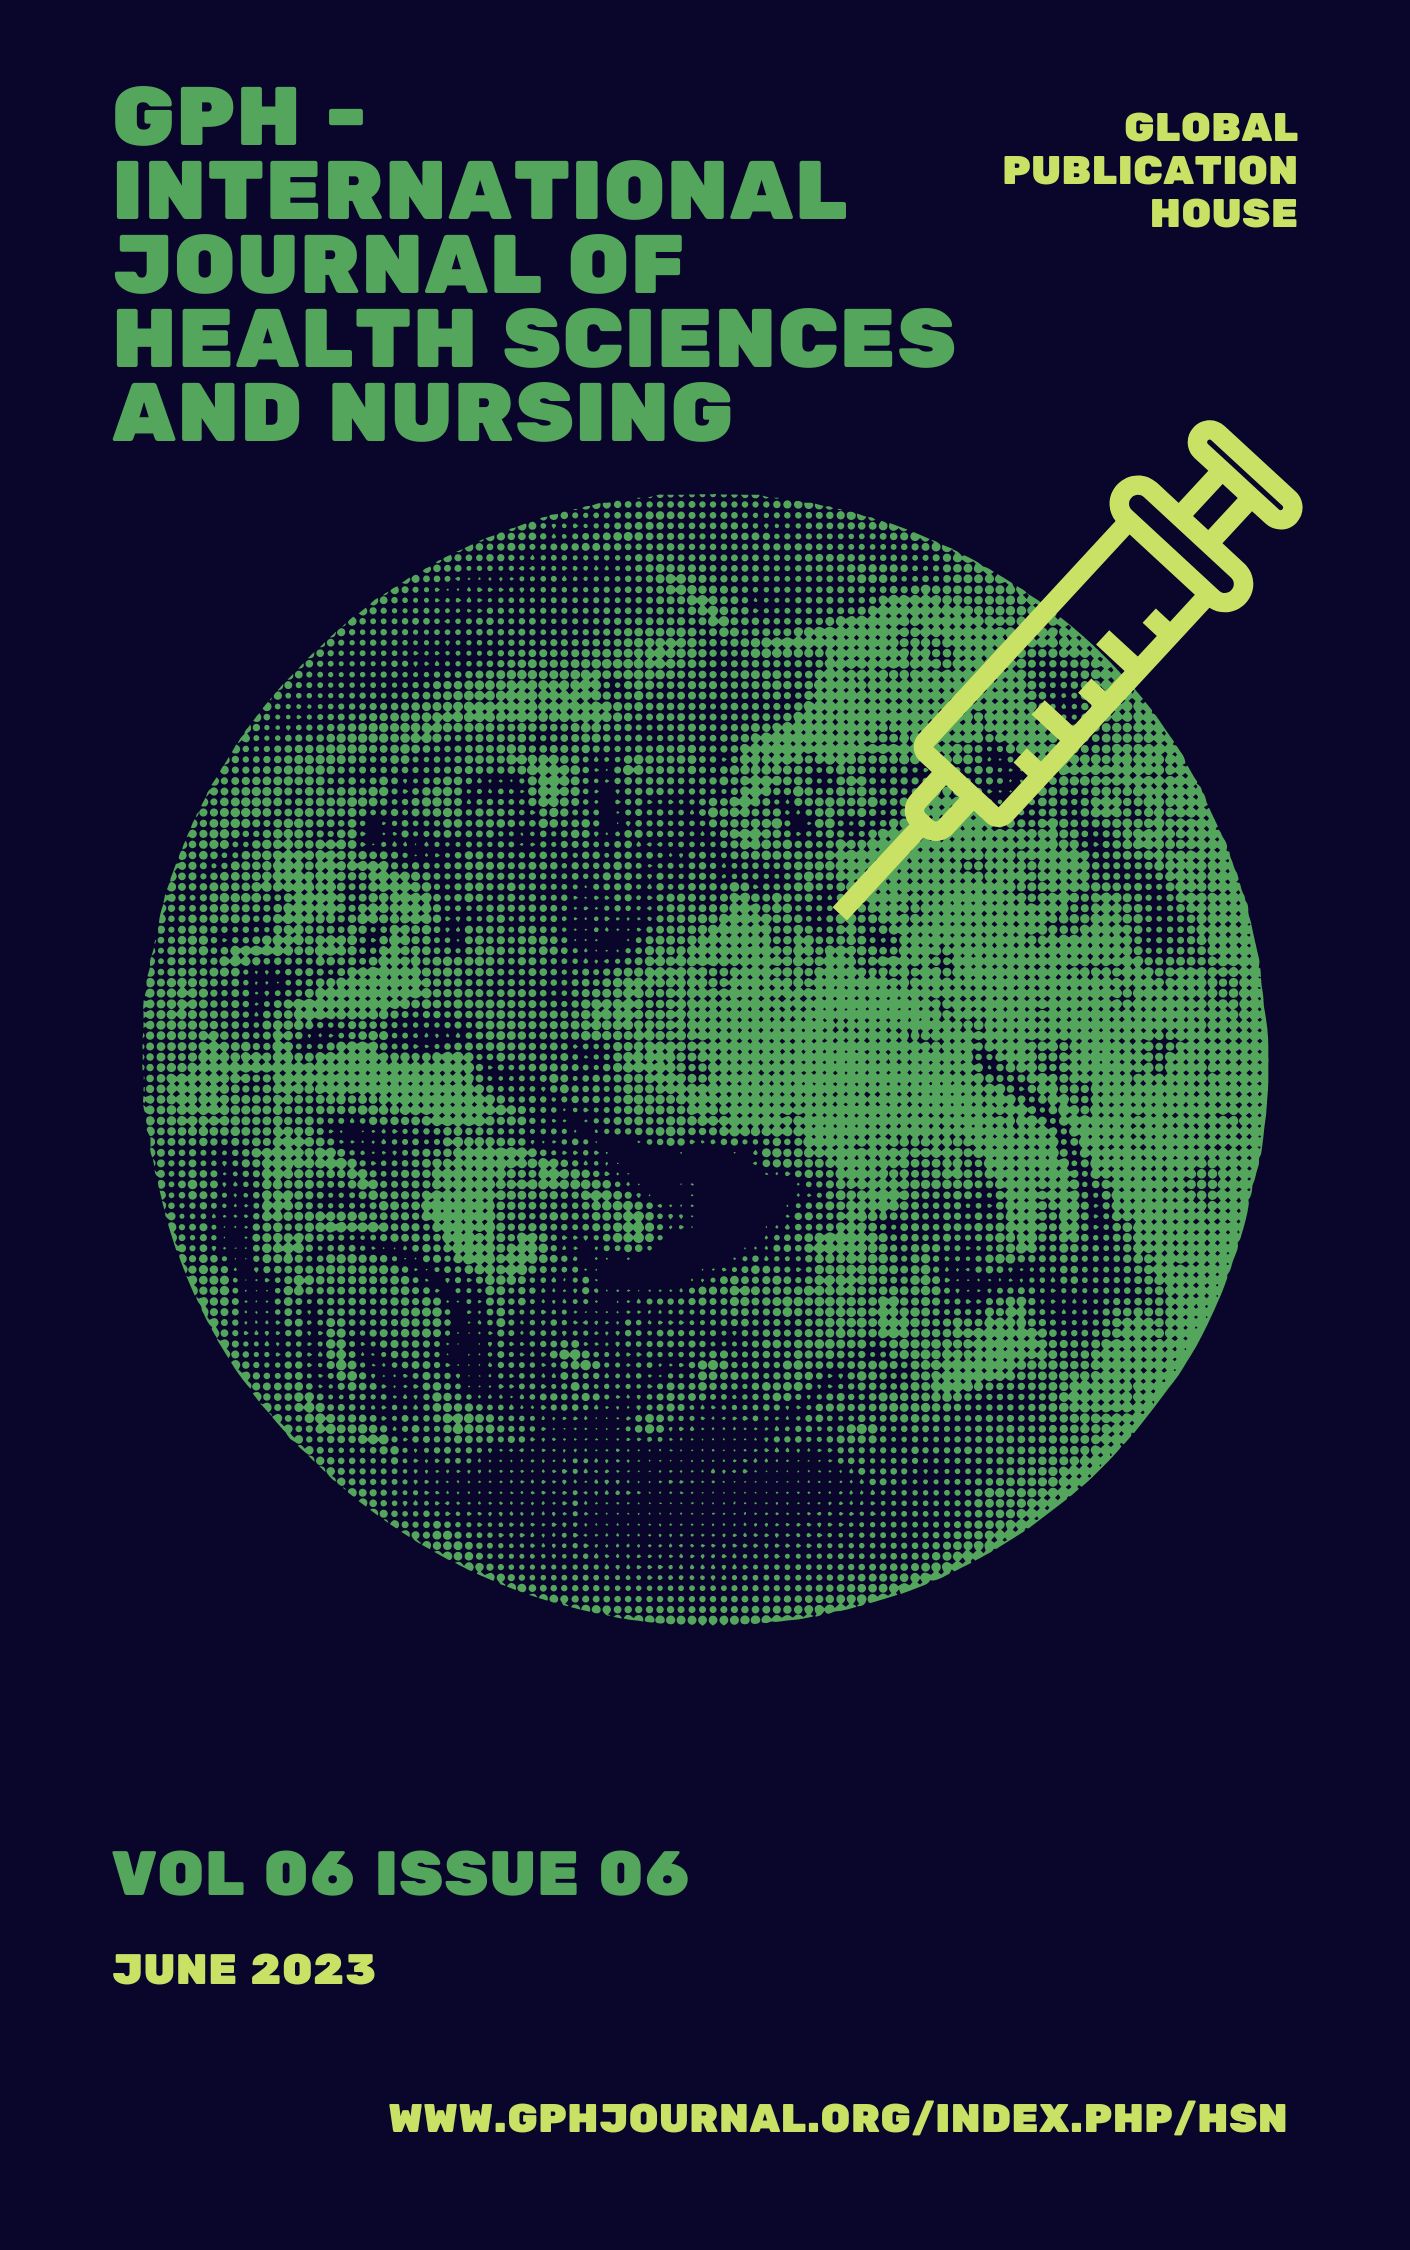 GPH - International Journal of Health Sciences and Nursing